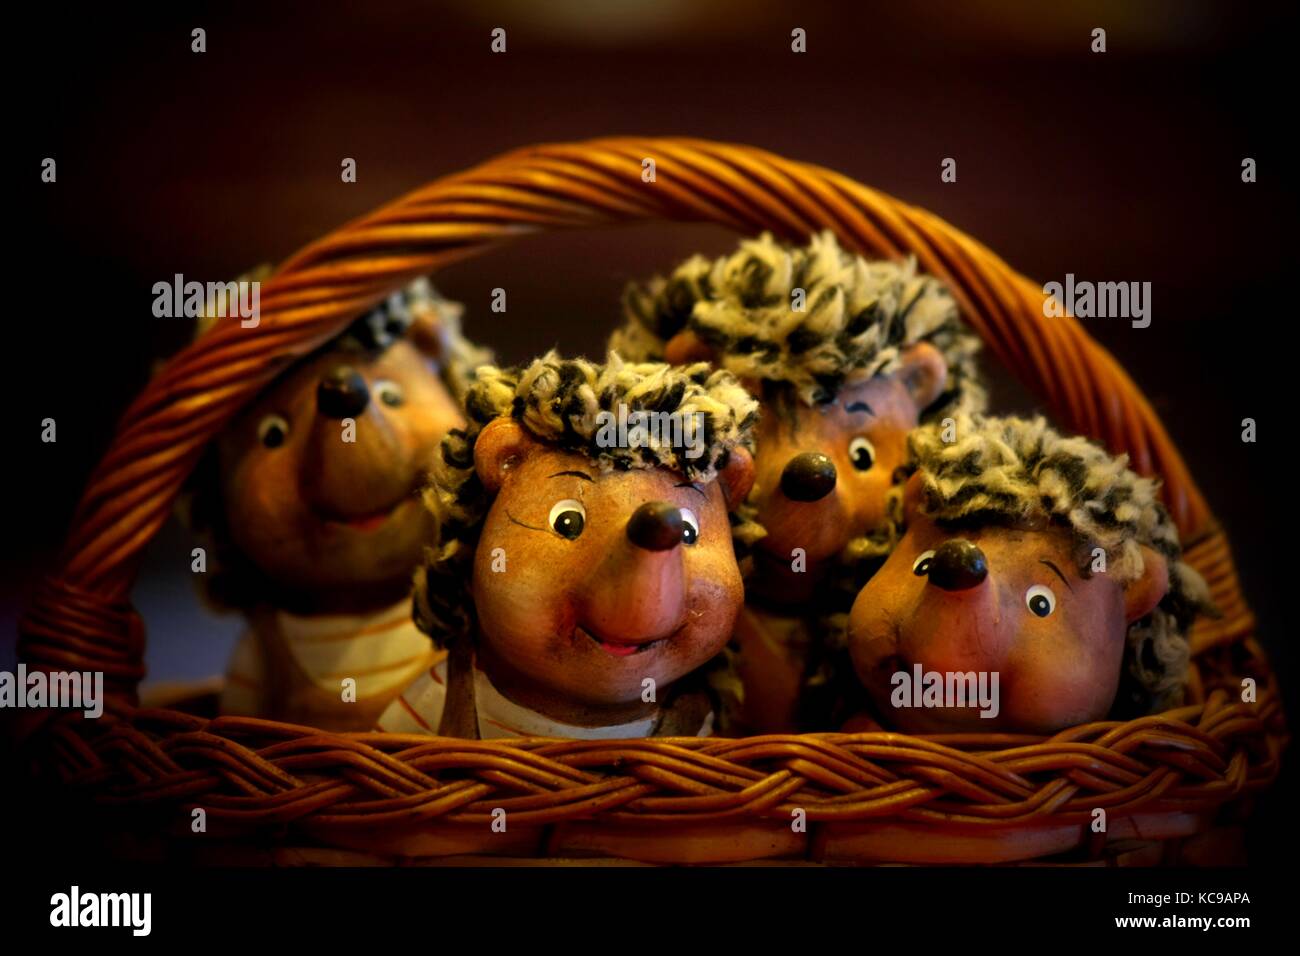 Hedgehog dolls.in the basket. Stock Photo